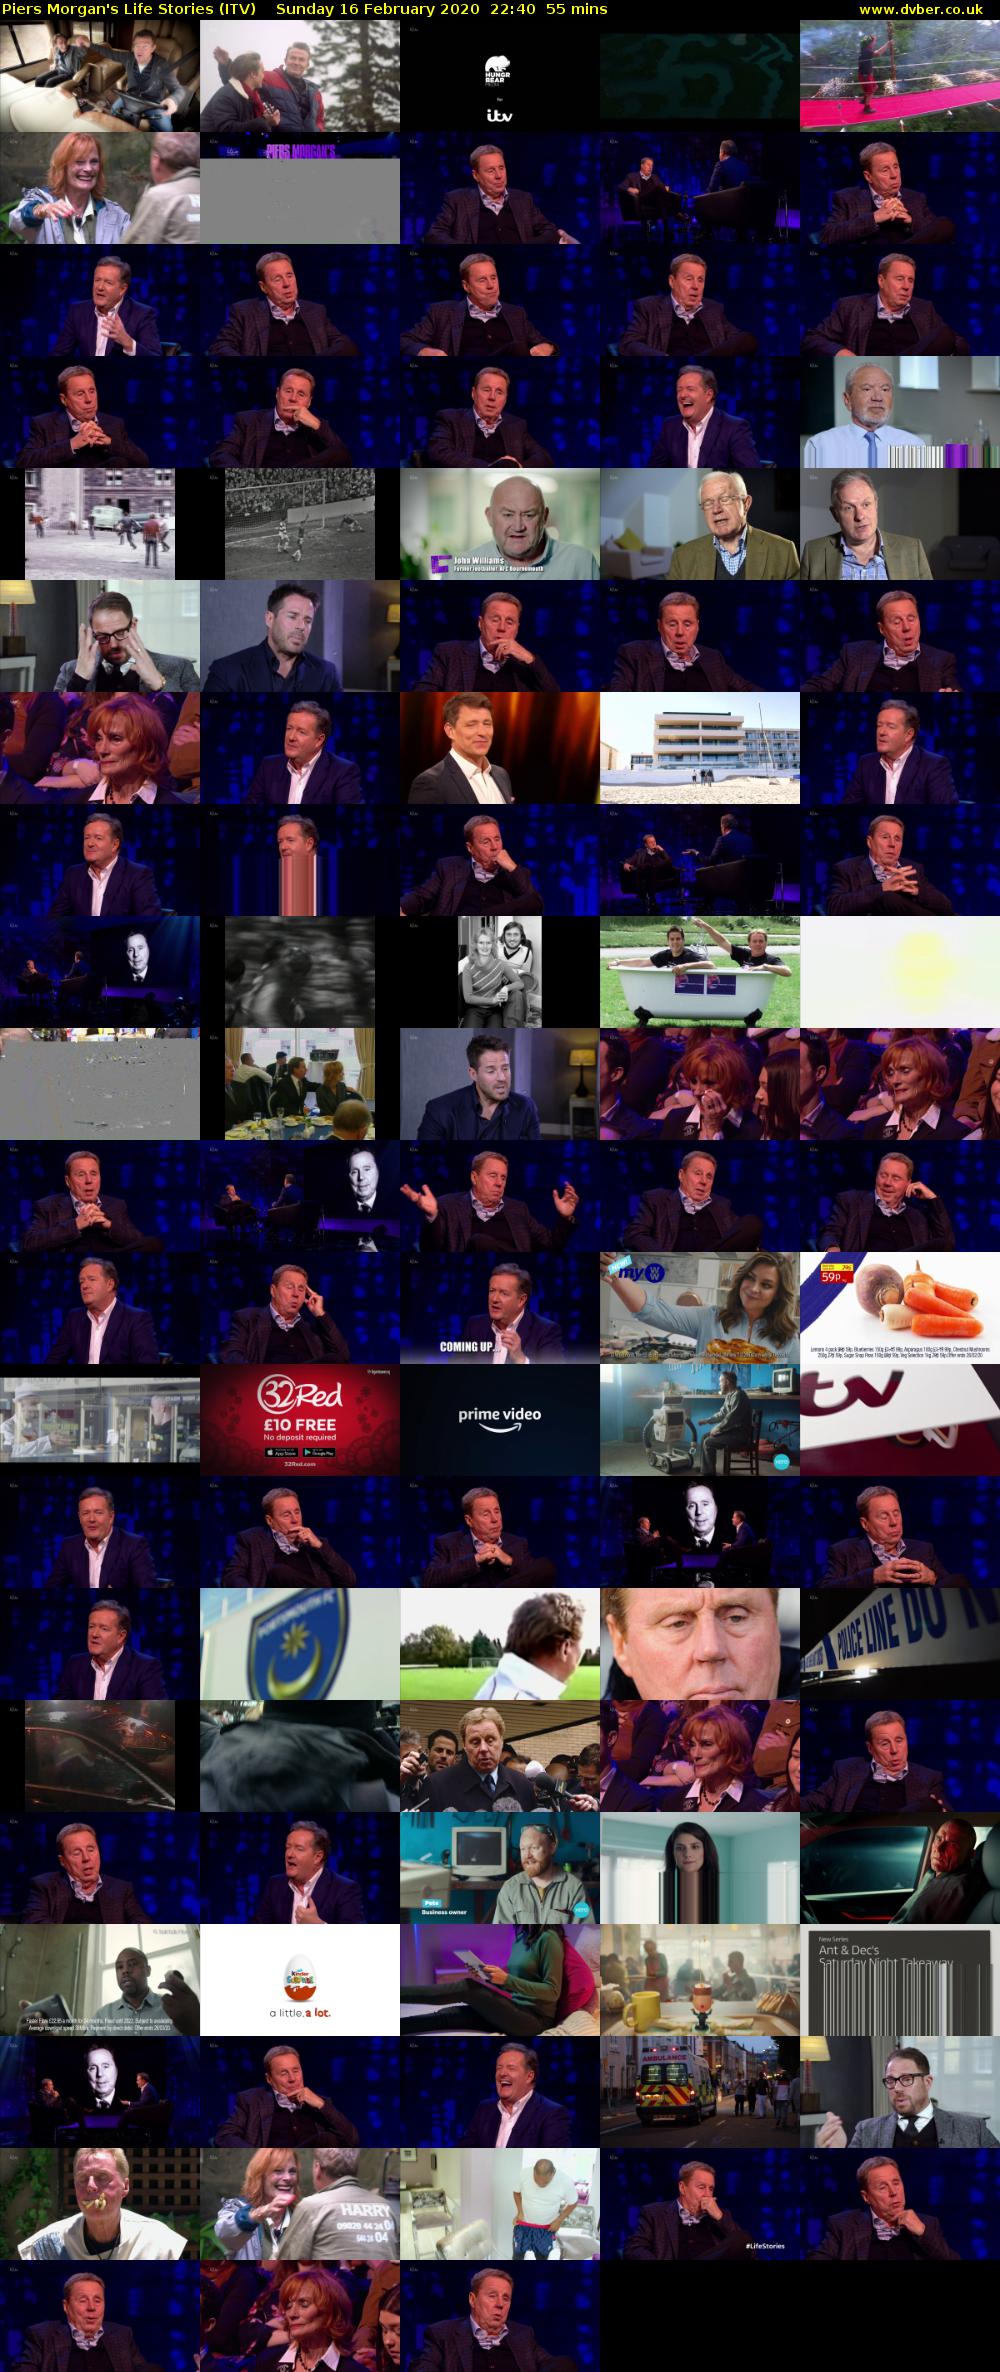 Piers Morgan's Life Stories (ITV) Sunday 16 February 2020 22:40 - 23:35